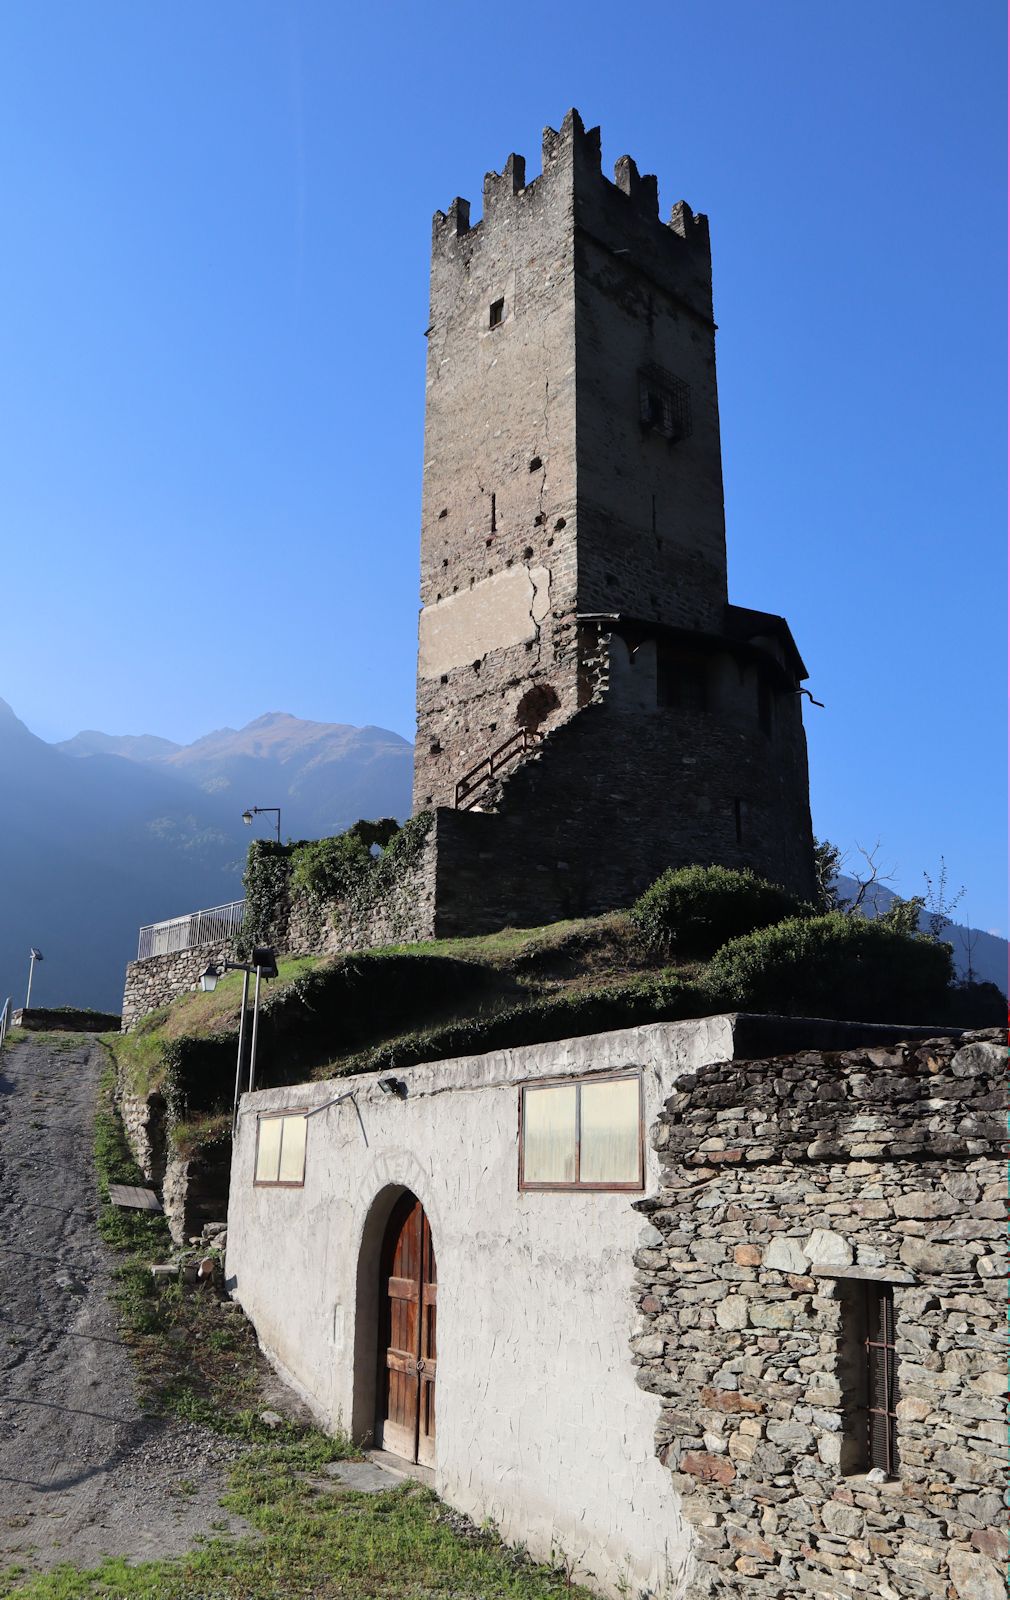 Reste der Burg in Mazzo di Valtellina, heute in Privatbesitz